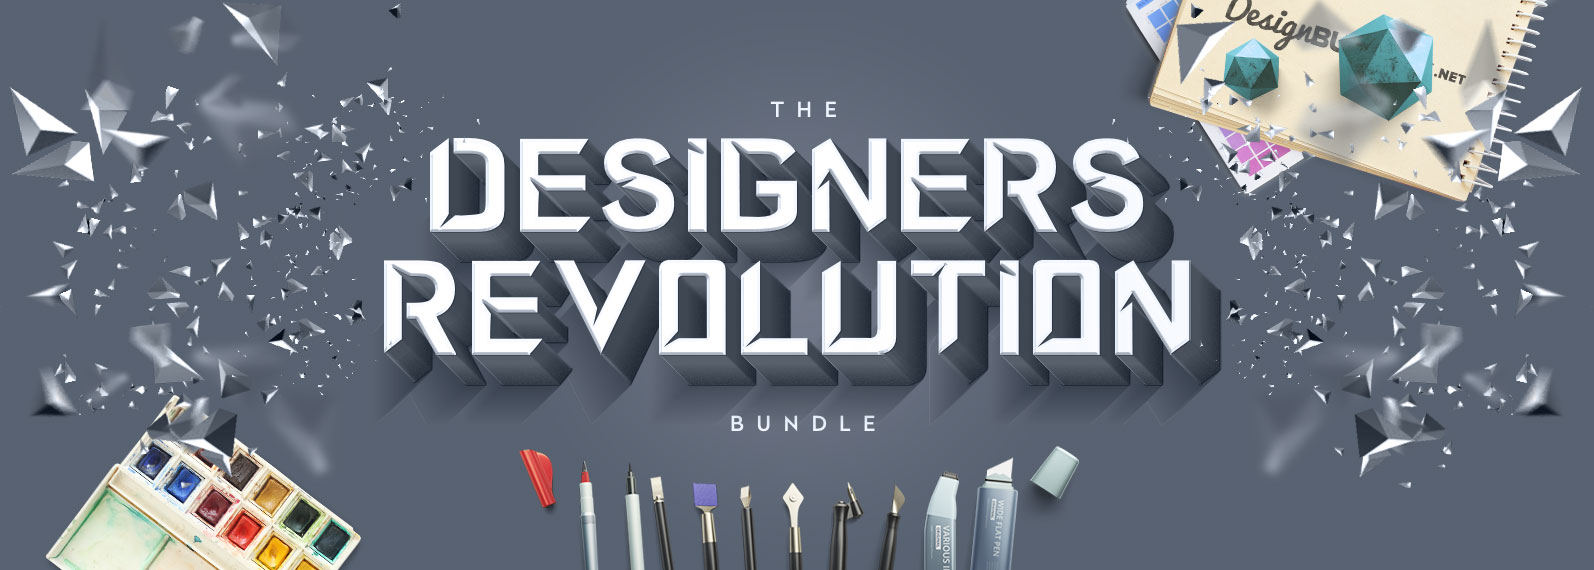 Designers Revolution Bundle Cover